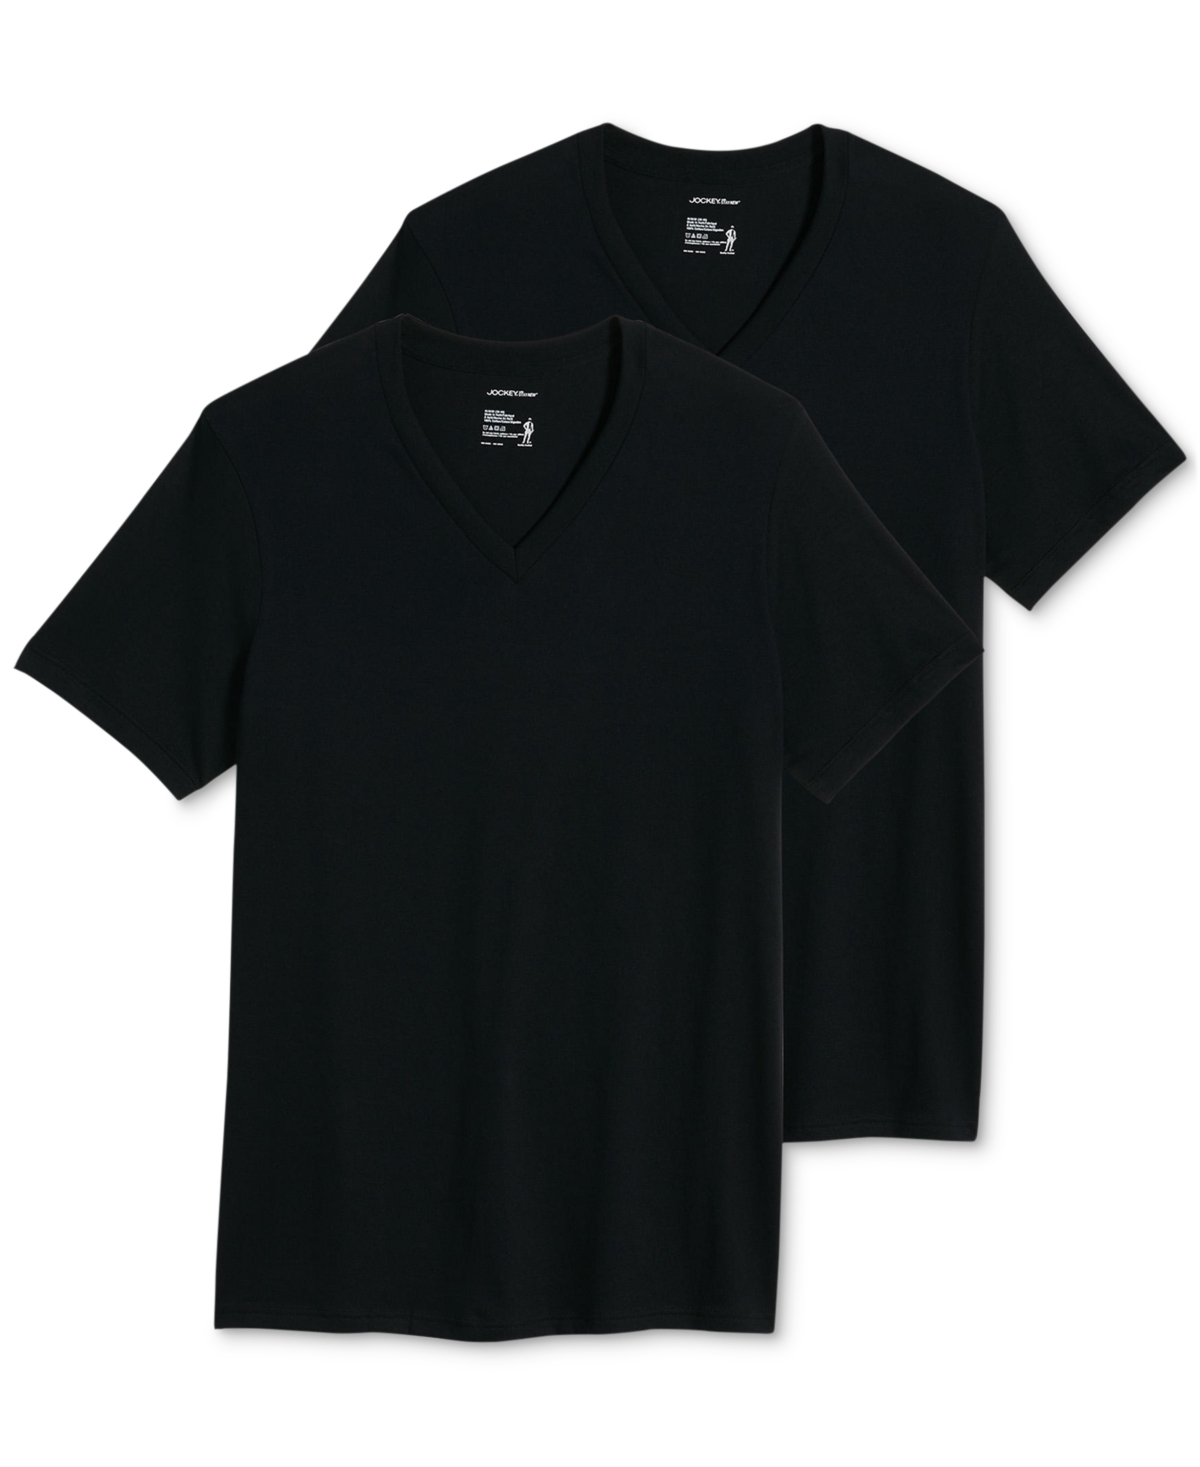 Men's Big & Tall Classic Tagless V-Neck Undershirt 2-pack - Black